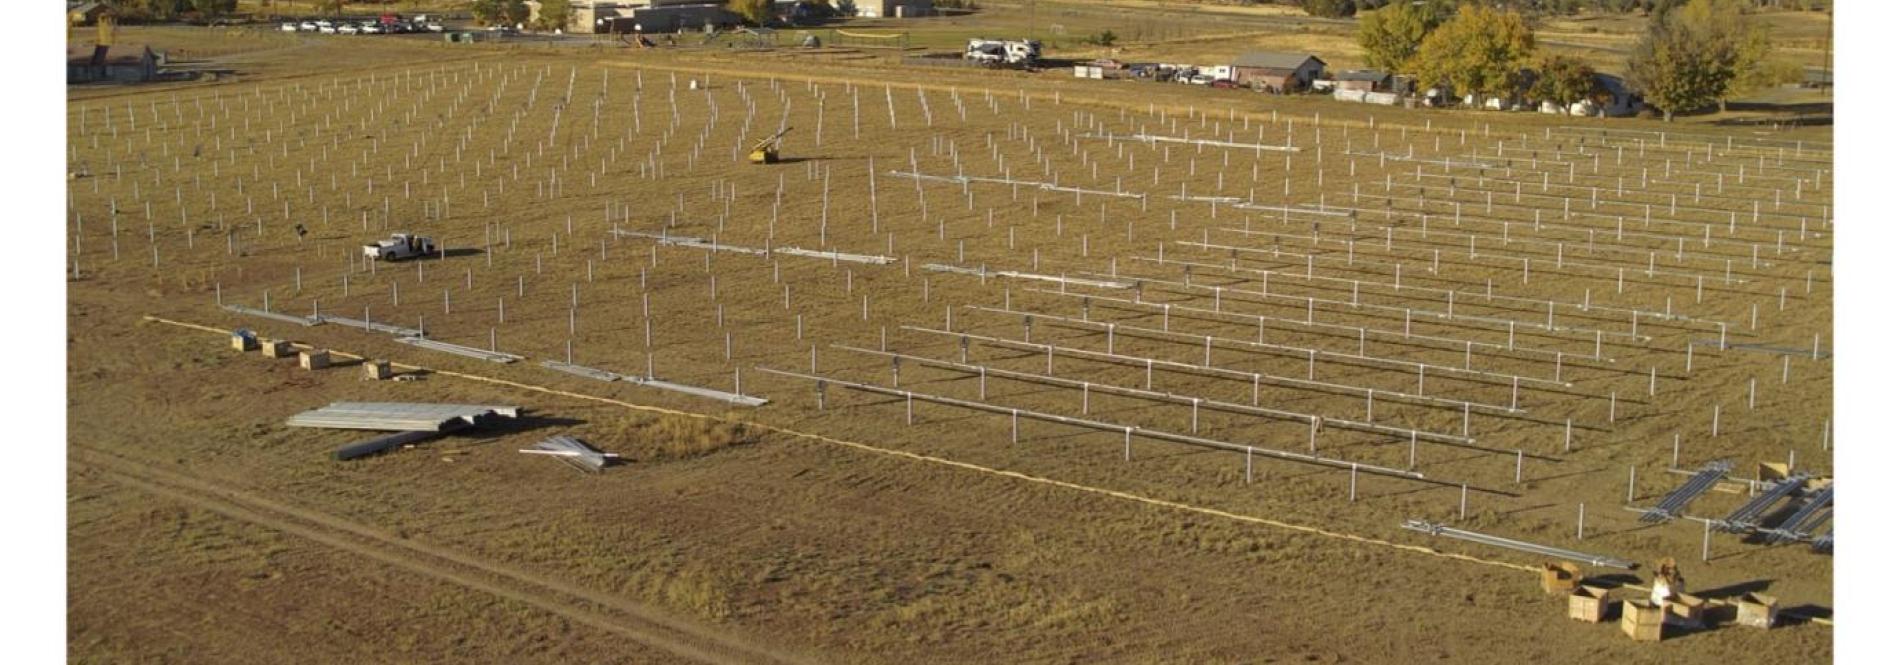 Pioneering an Energy-Independent Future: LPEA's Sunnyside Community Solar Garden